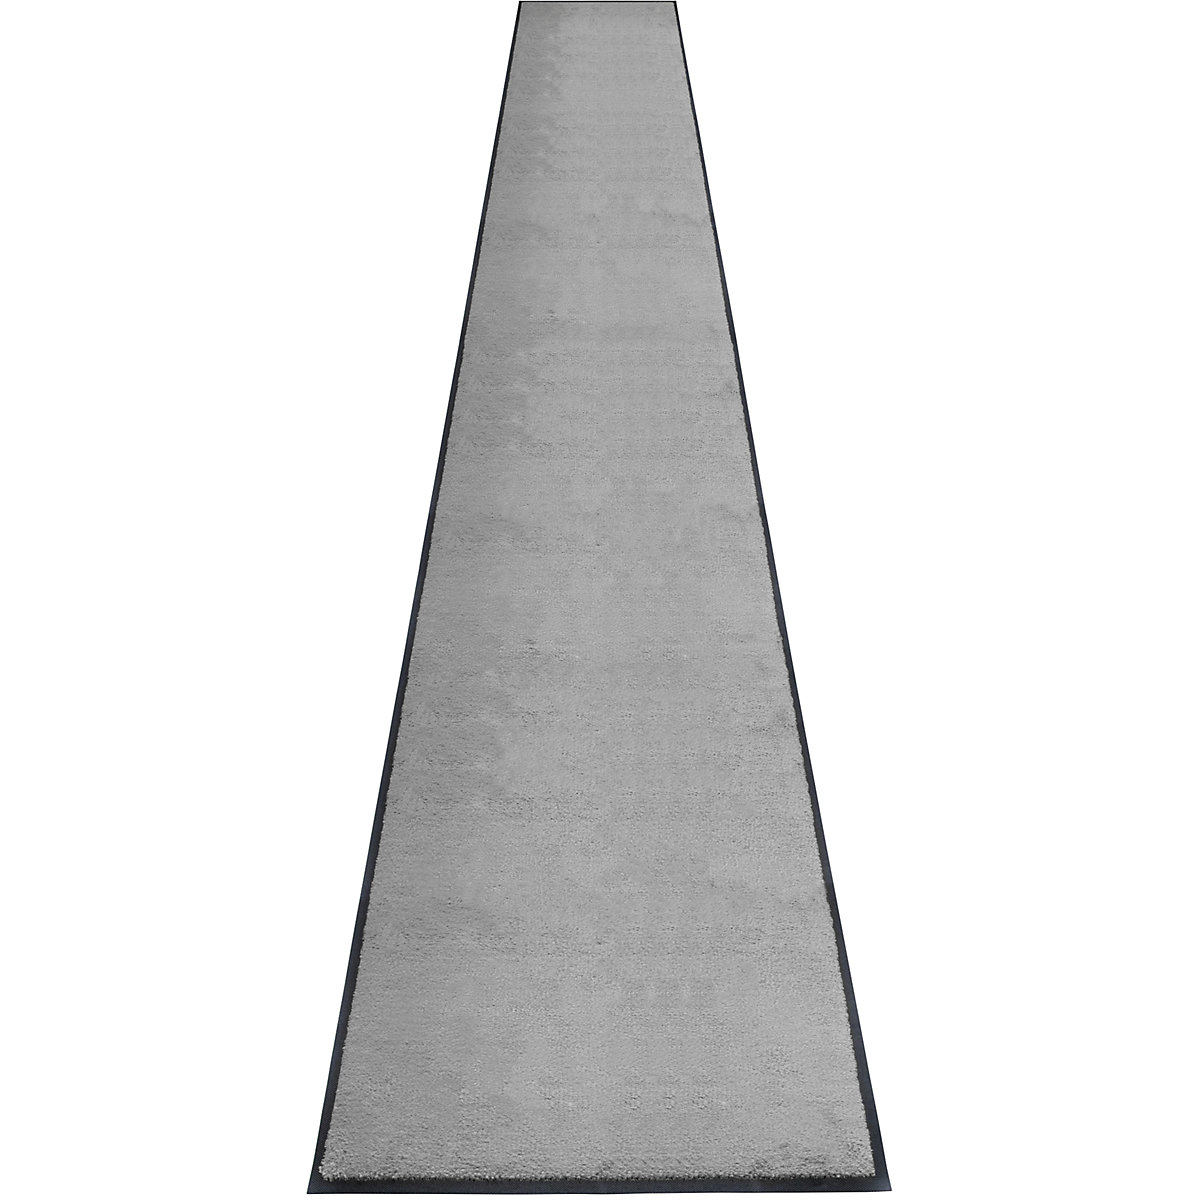 Vuilvangmat EAZYCARE STYLE, l x b = 3000 x 850 mm, basaltgrijs-3